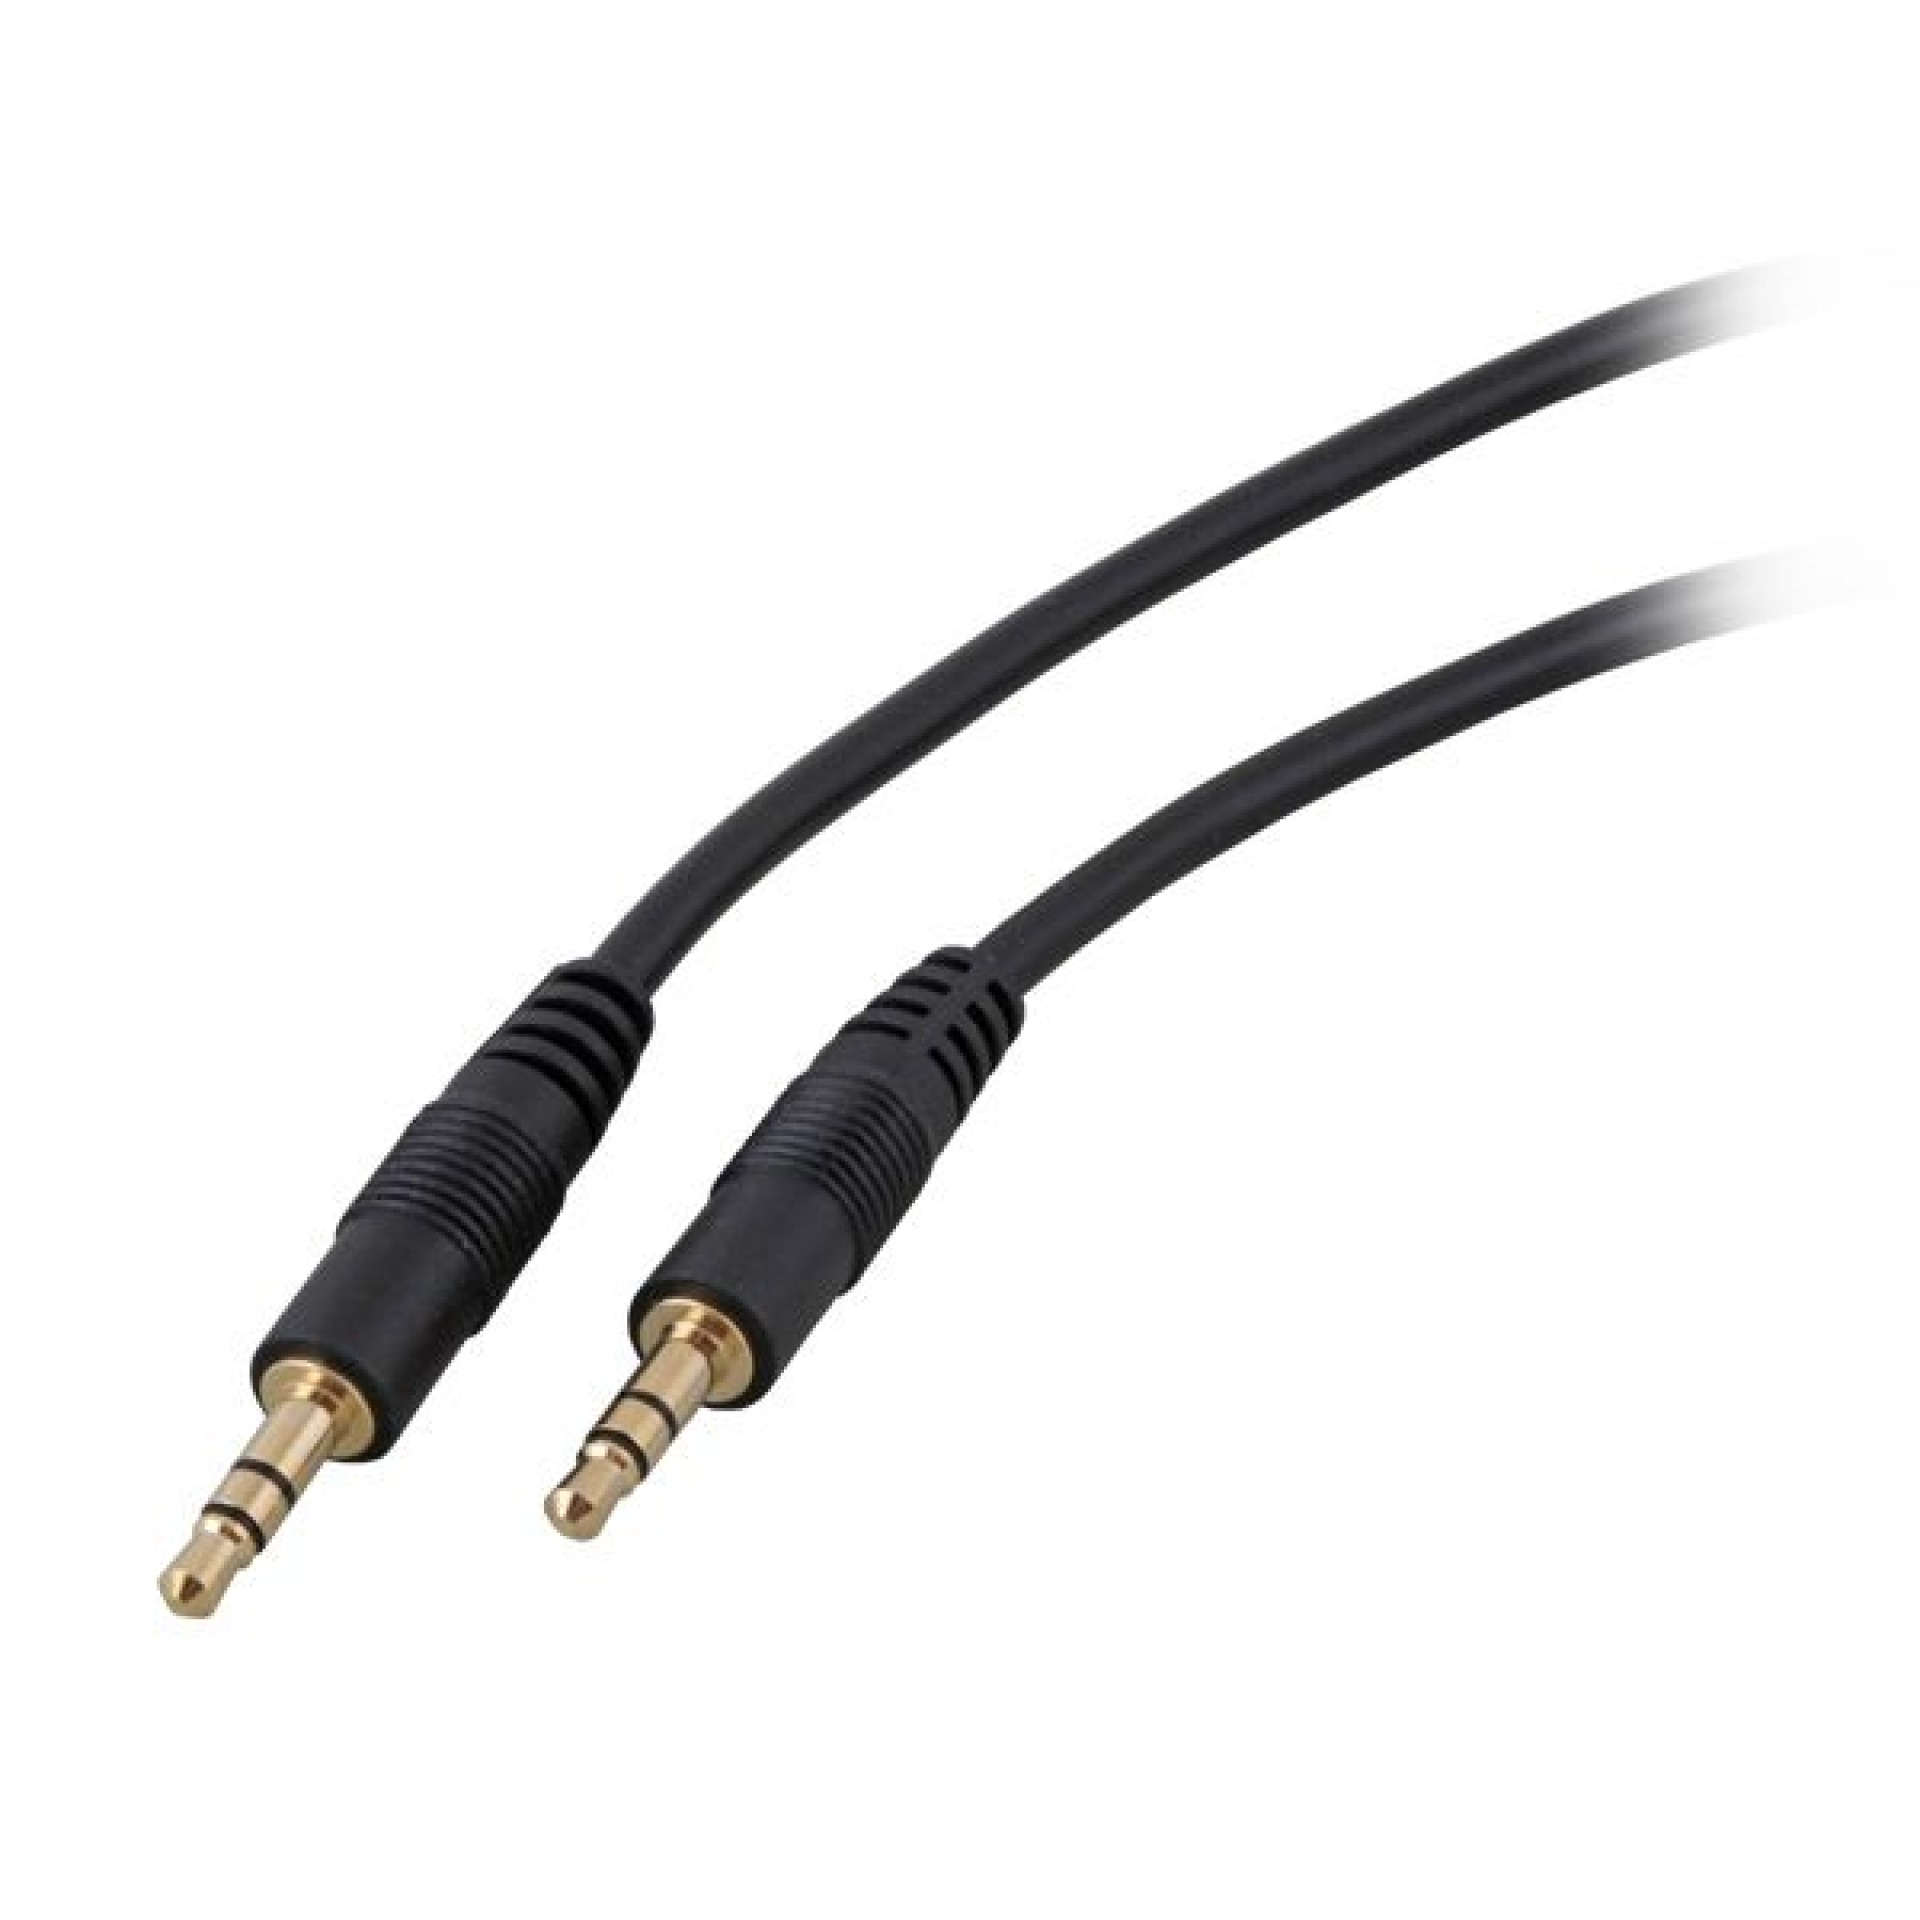 Audio Connection Cabel, Klinke 3.5mm Stereo, 5 meters, black